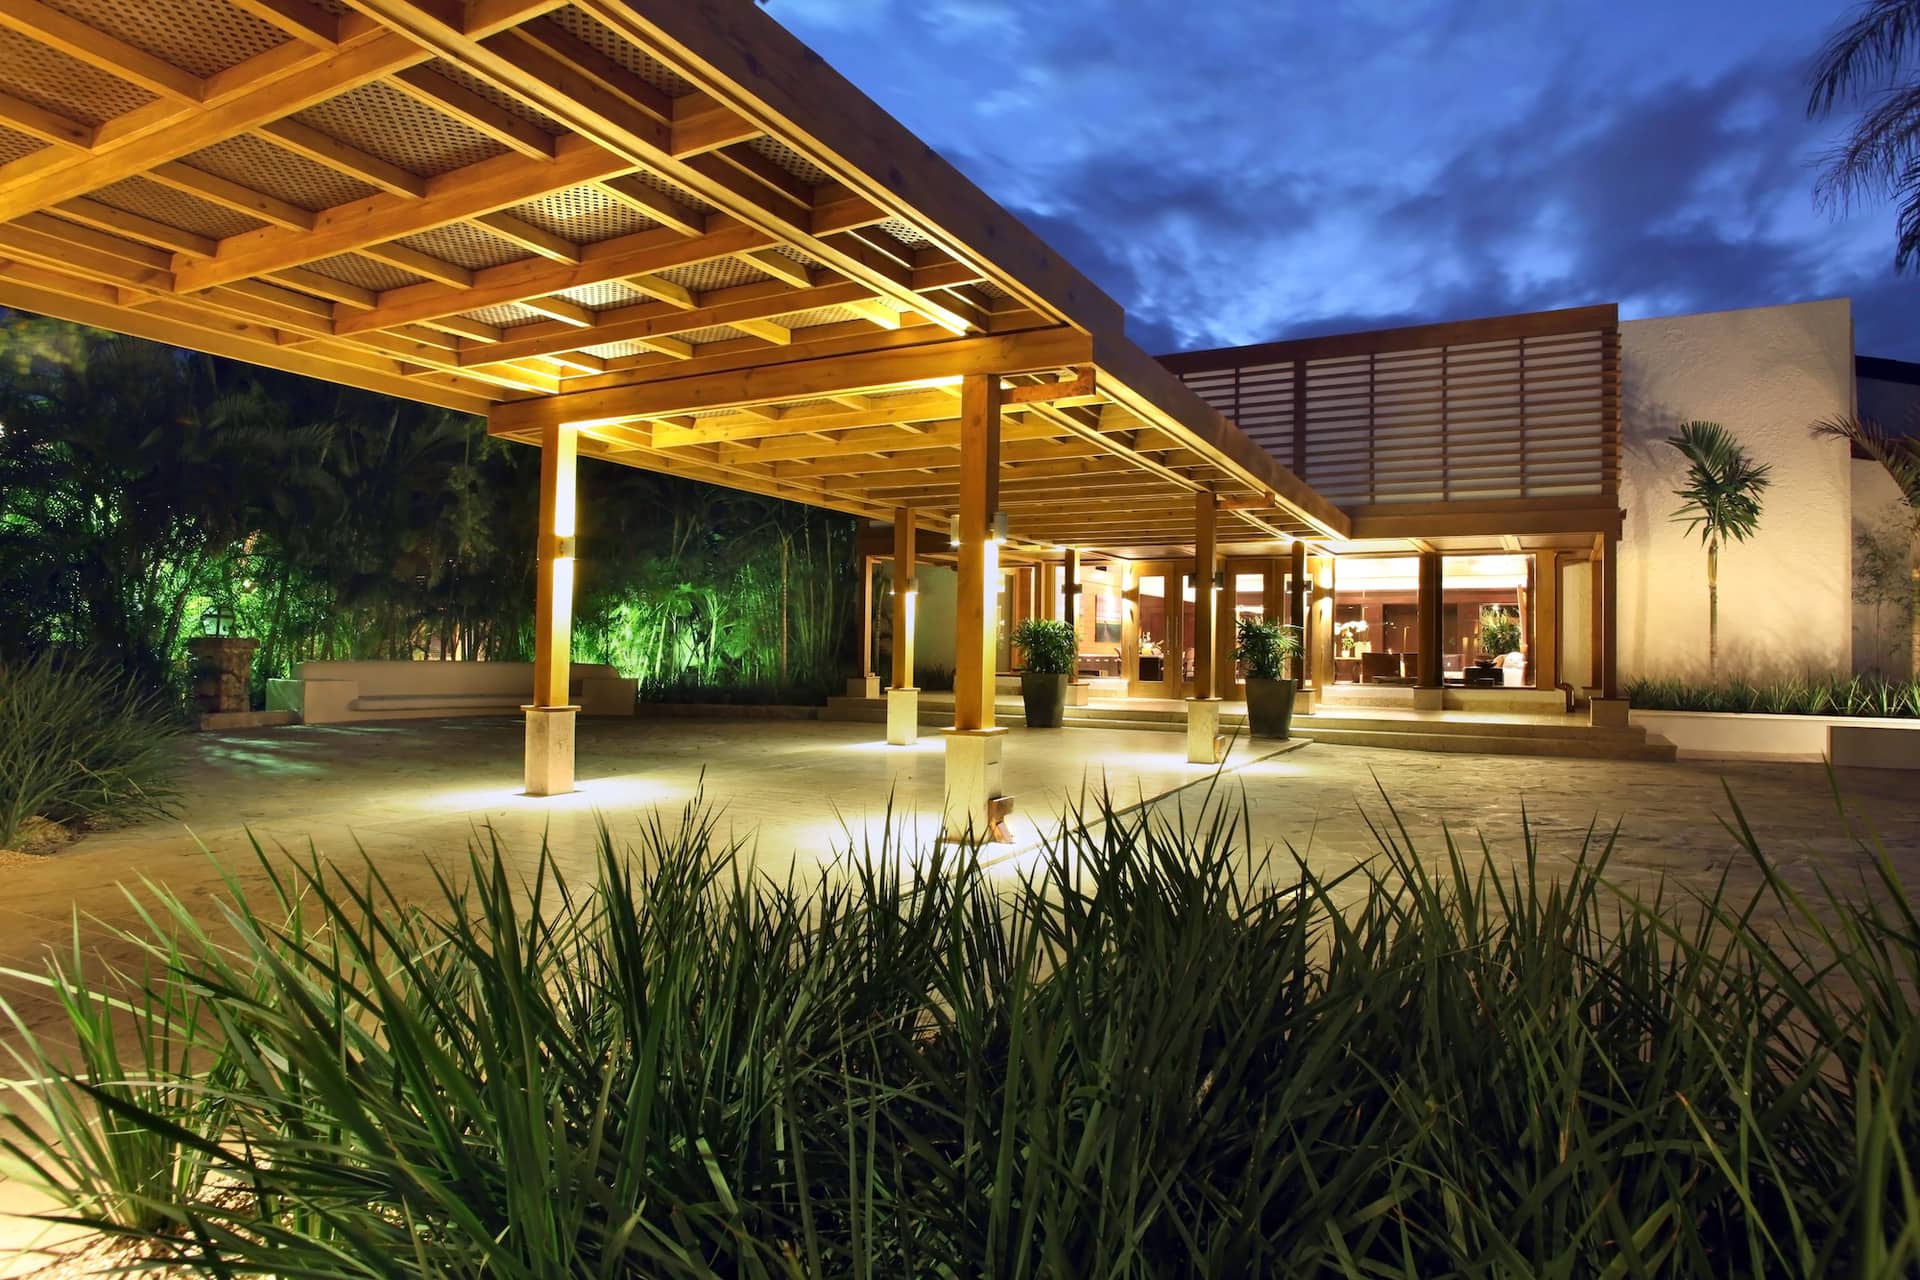 Casa de Campo Resort & Villas Flamboyan Conference Center For Meetings & Events In The Dominican Republic.